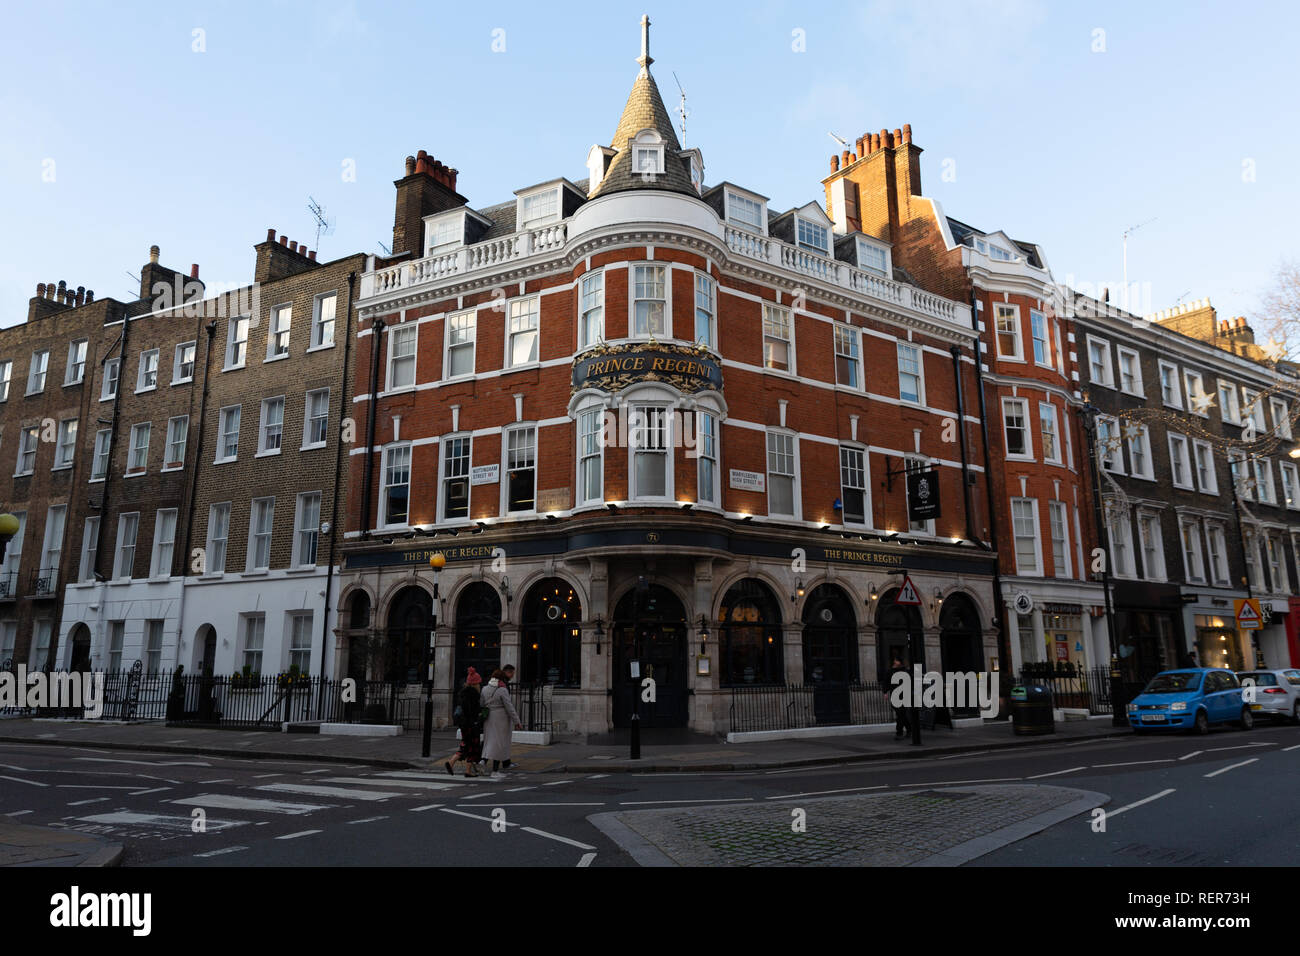 The Prince Regent, Marylebone High Street, London W1 Stock Photo